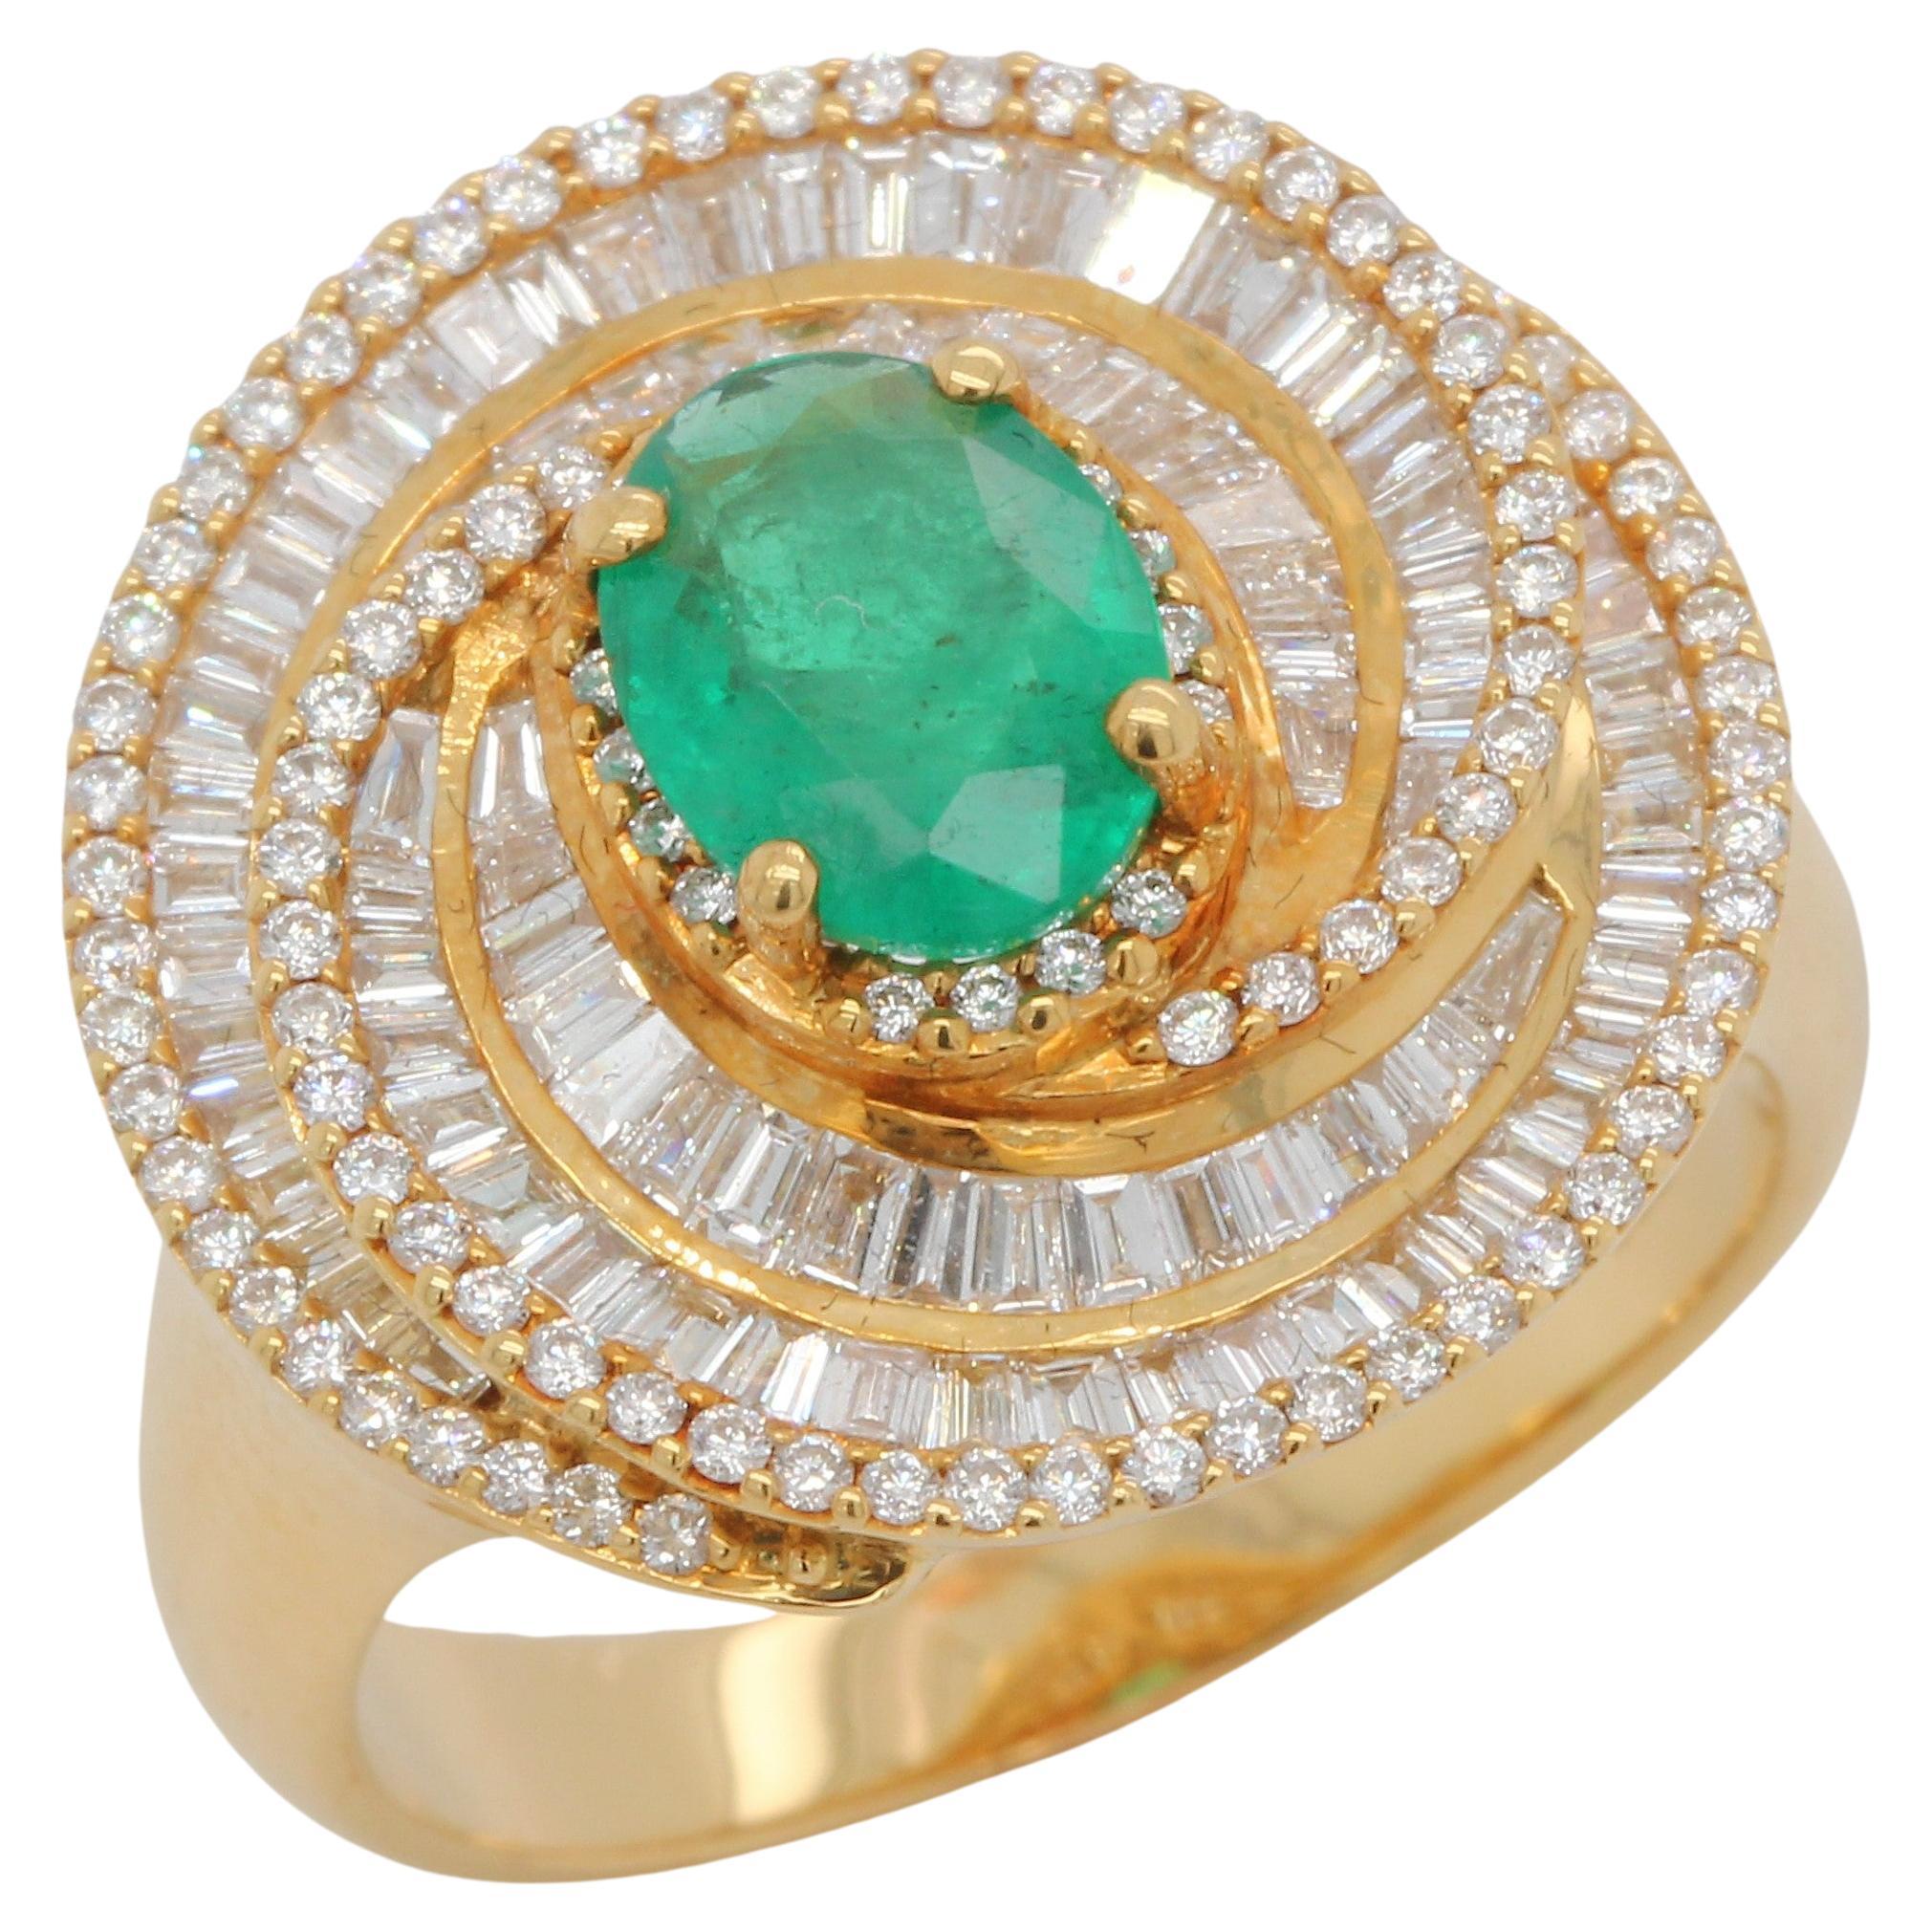 0.89 Carat Emerald and Diamond Ring in 18 Karat Gold